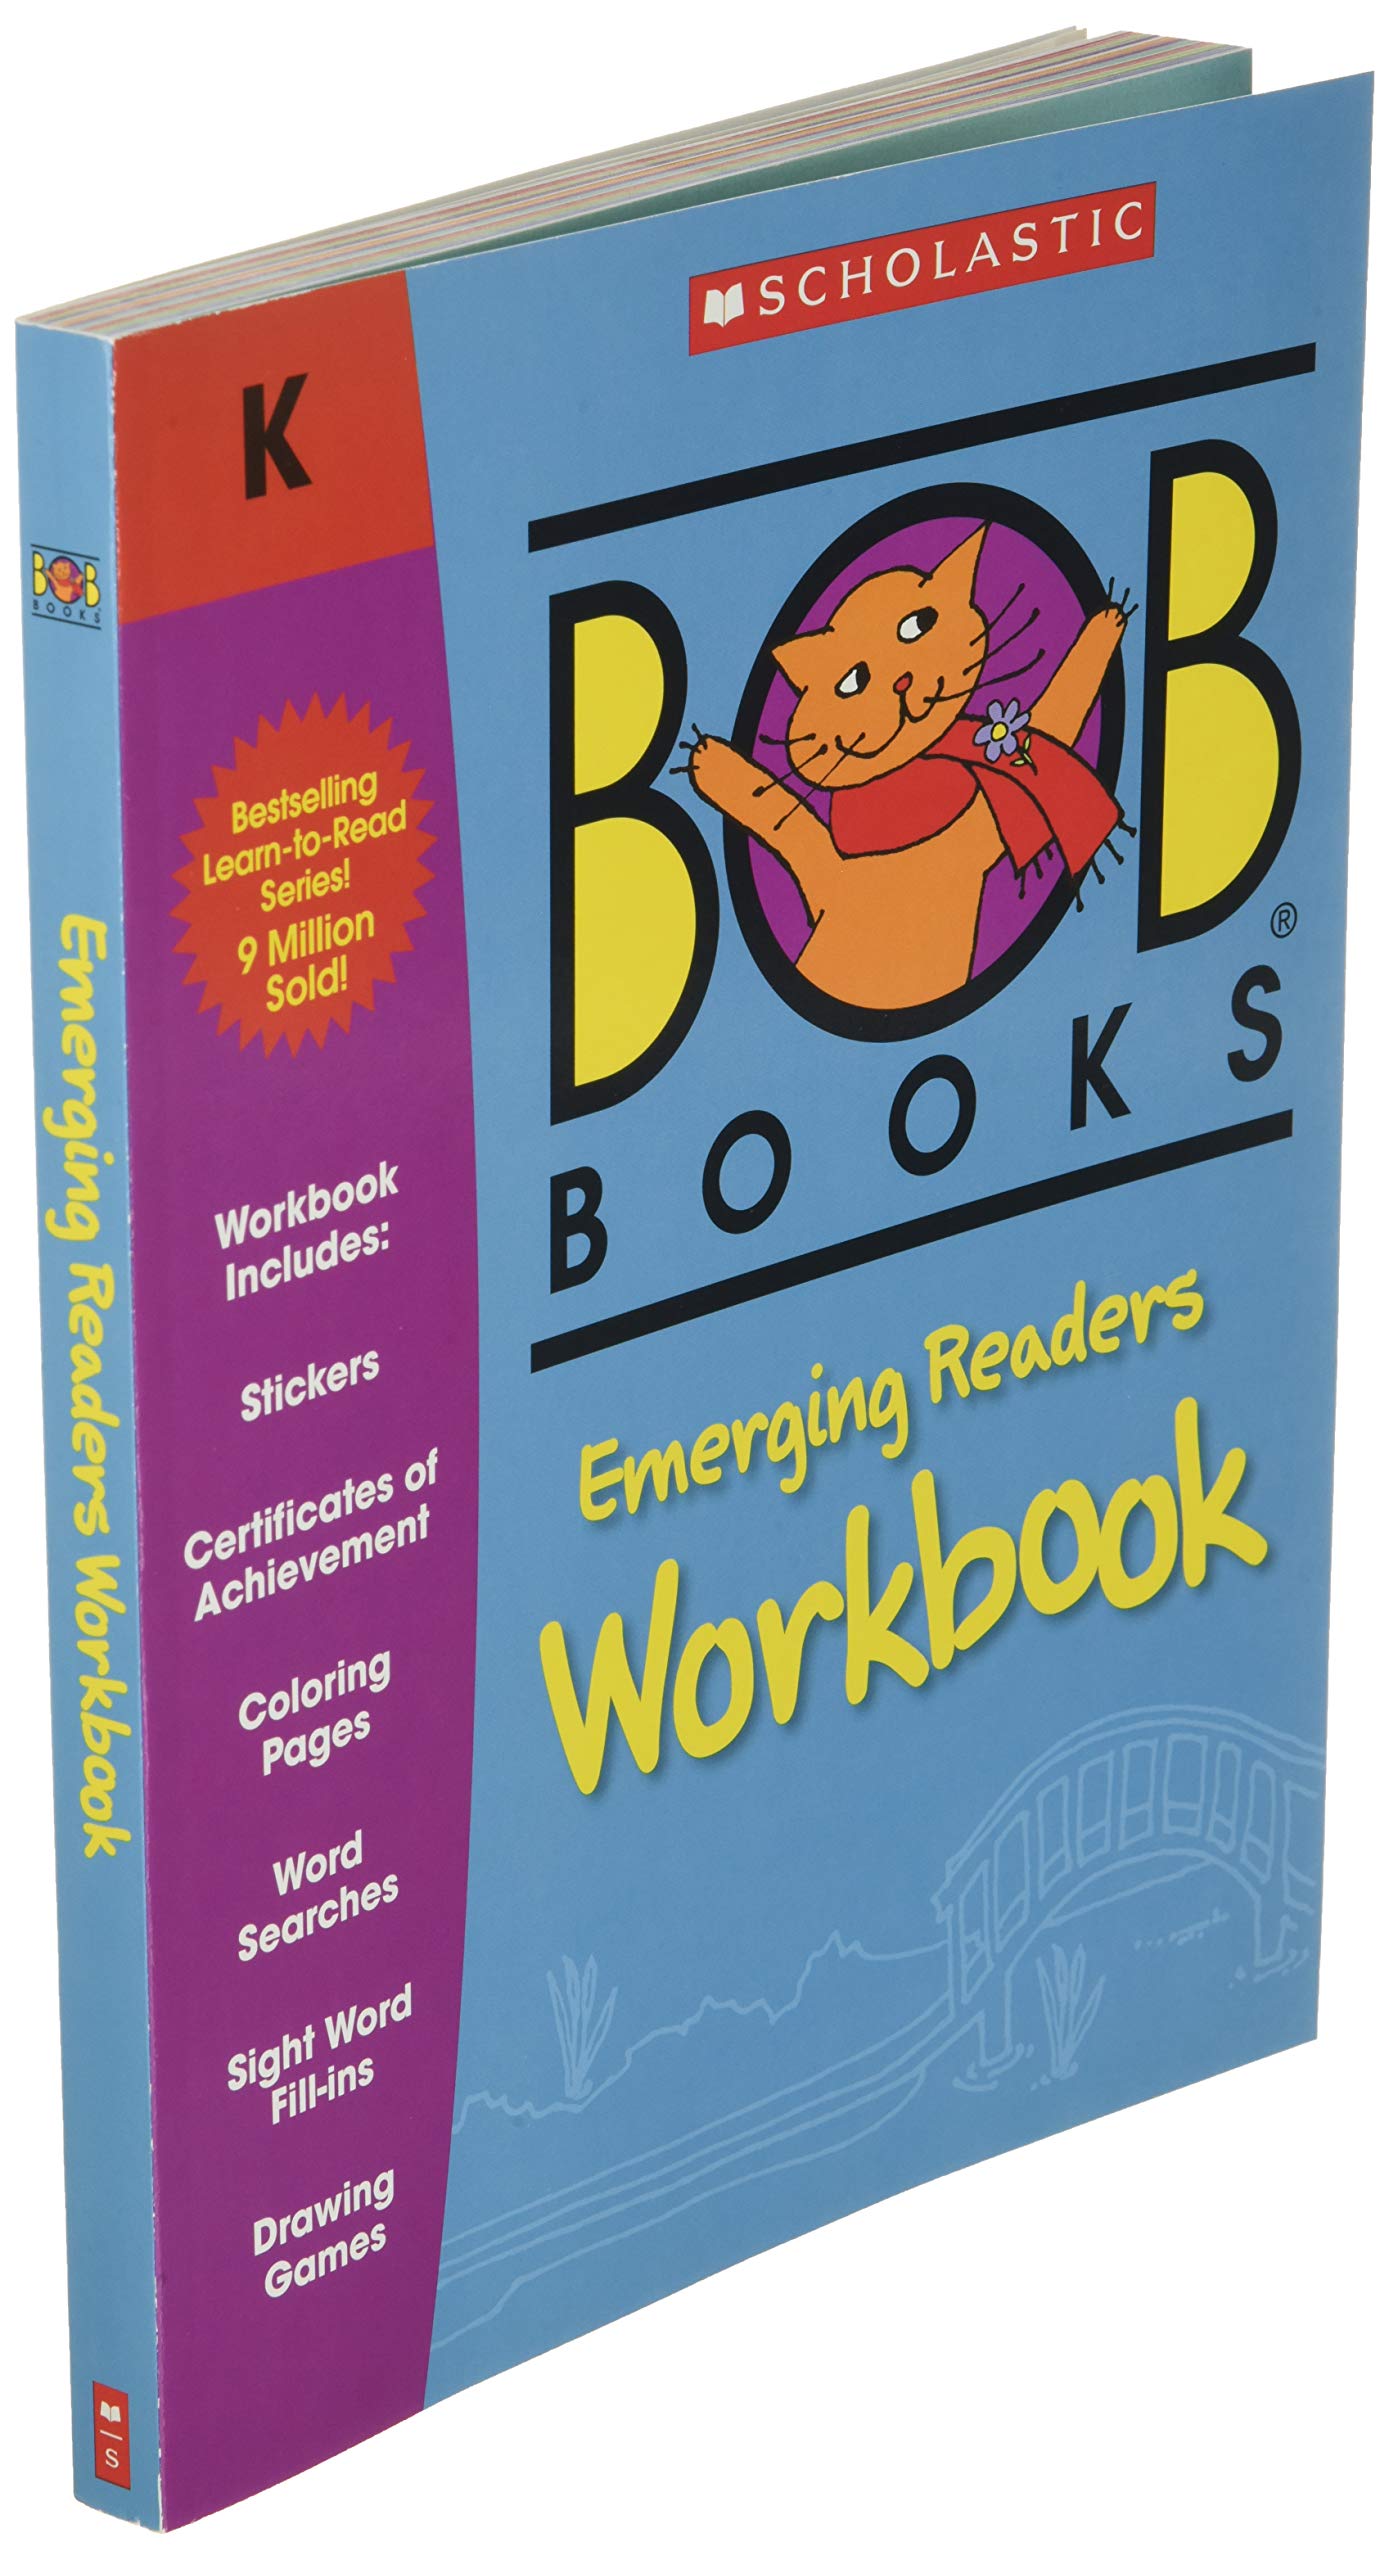 BOB Books: Emerging Readers Workbook